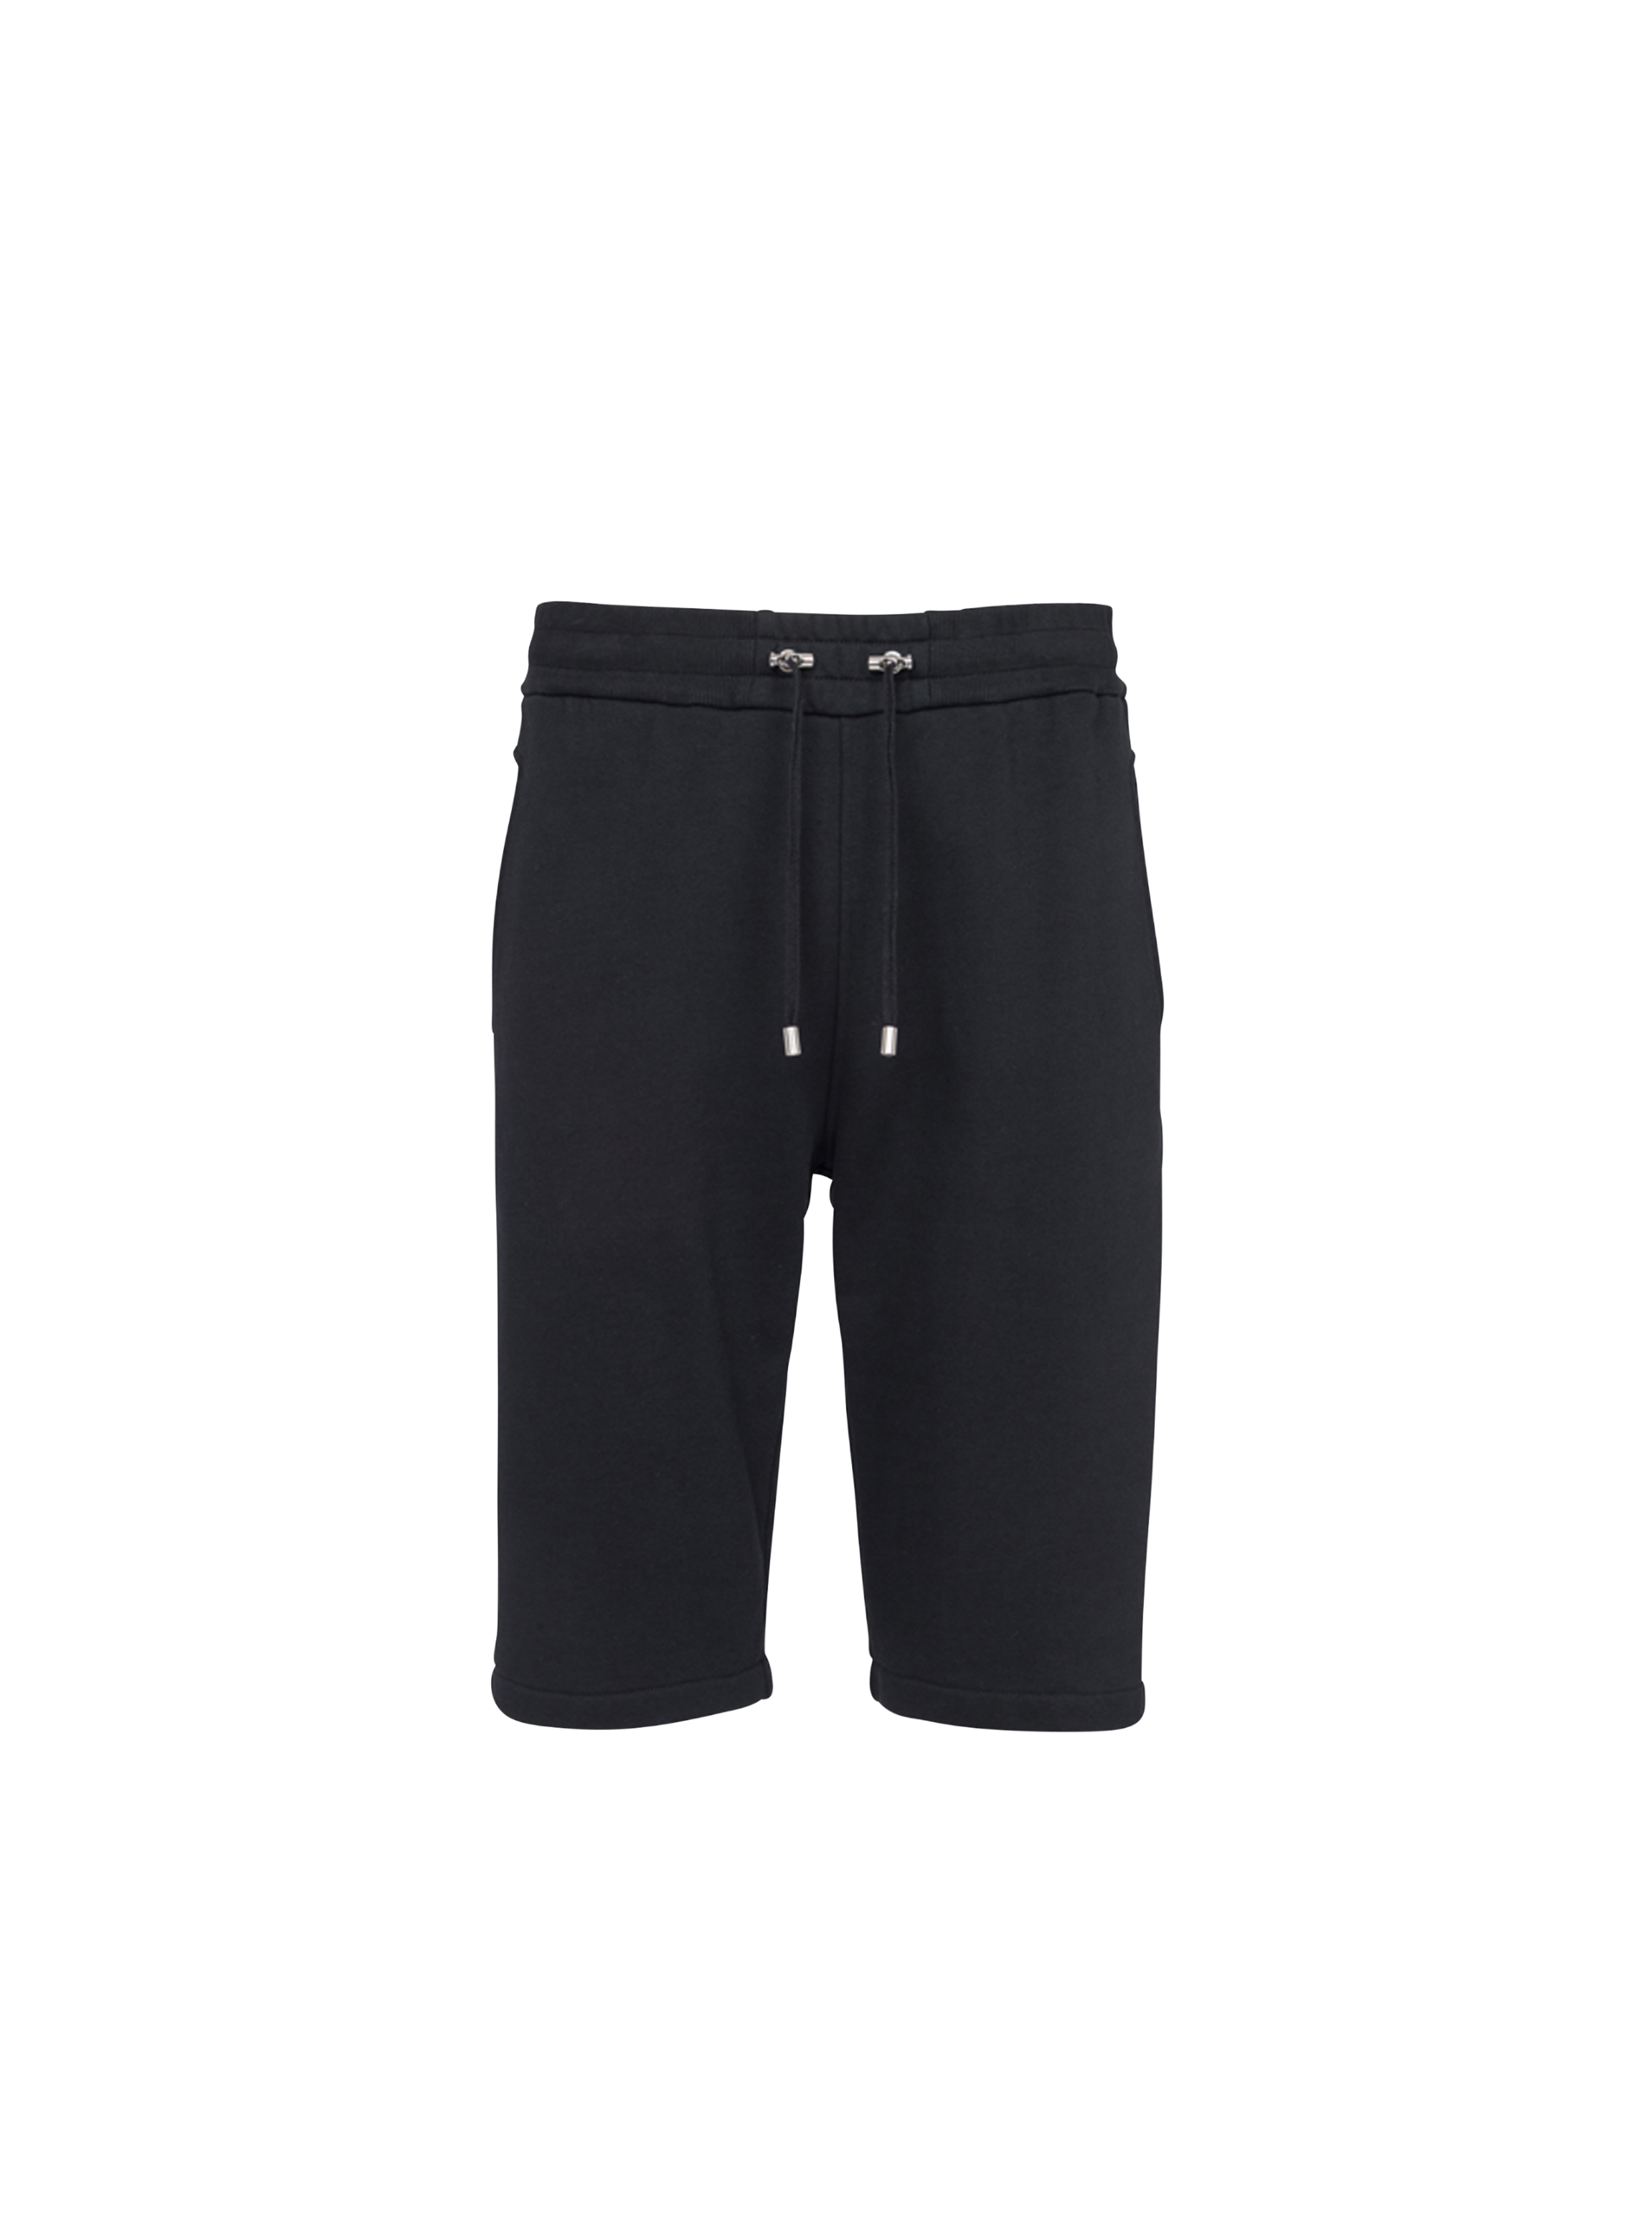 Cotton shorts with flocked Balmain Paris logo, black